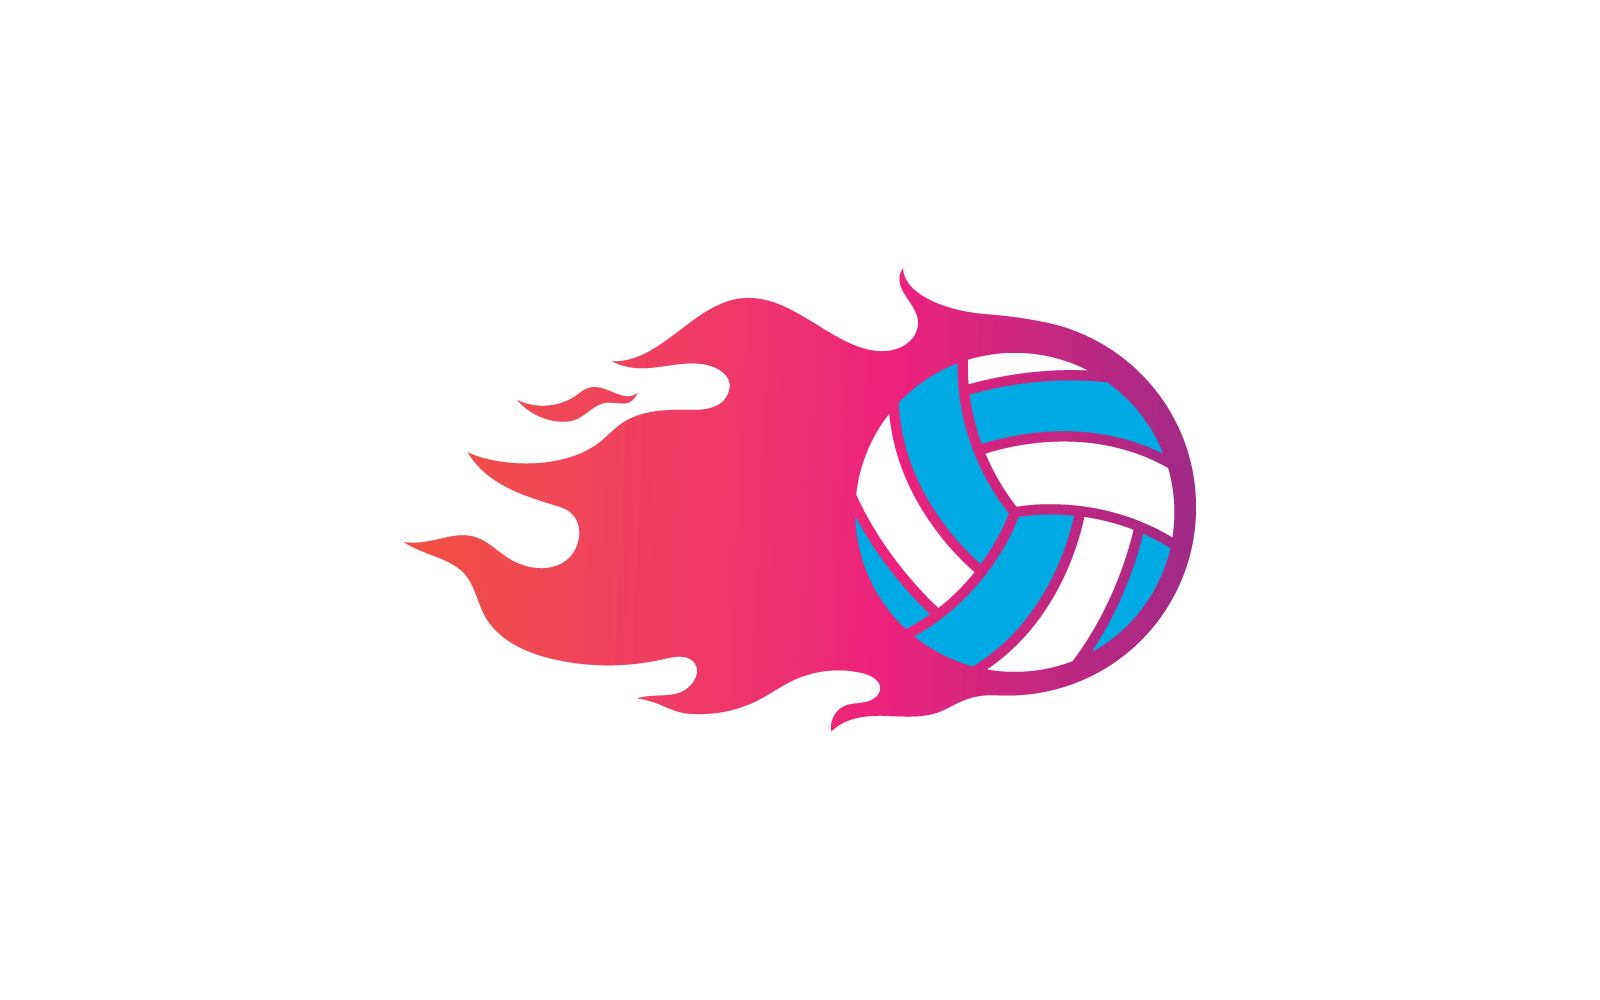 Volley ball logo illustration flat design template